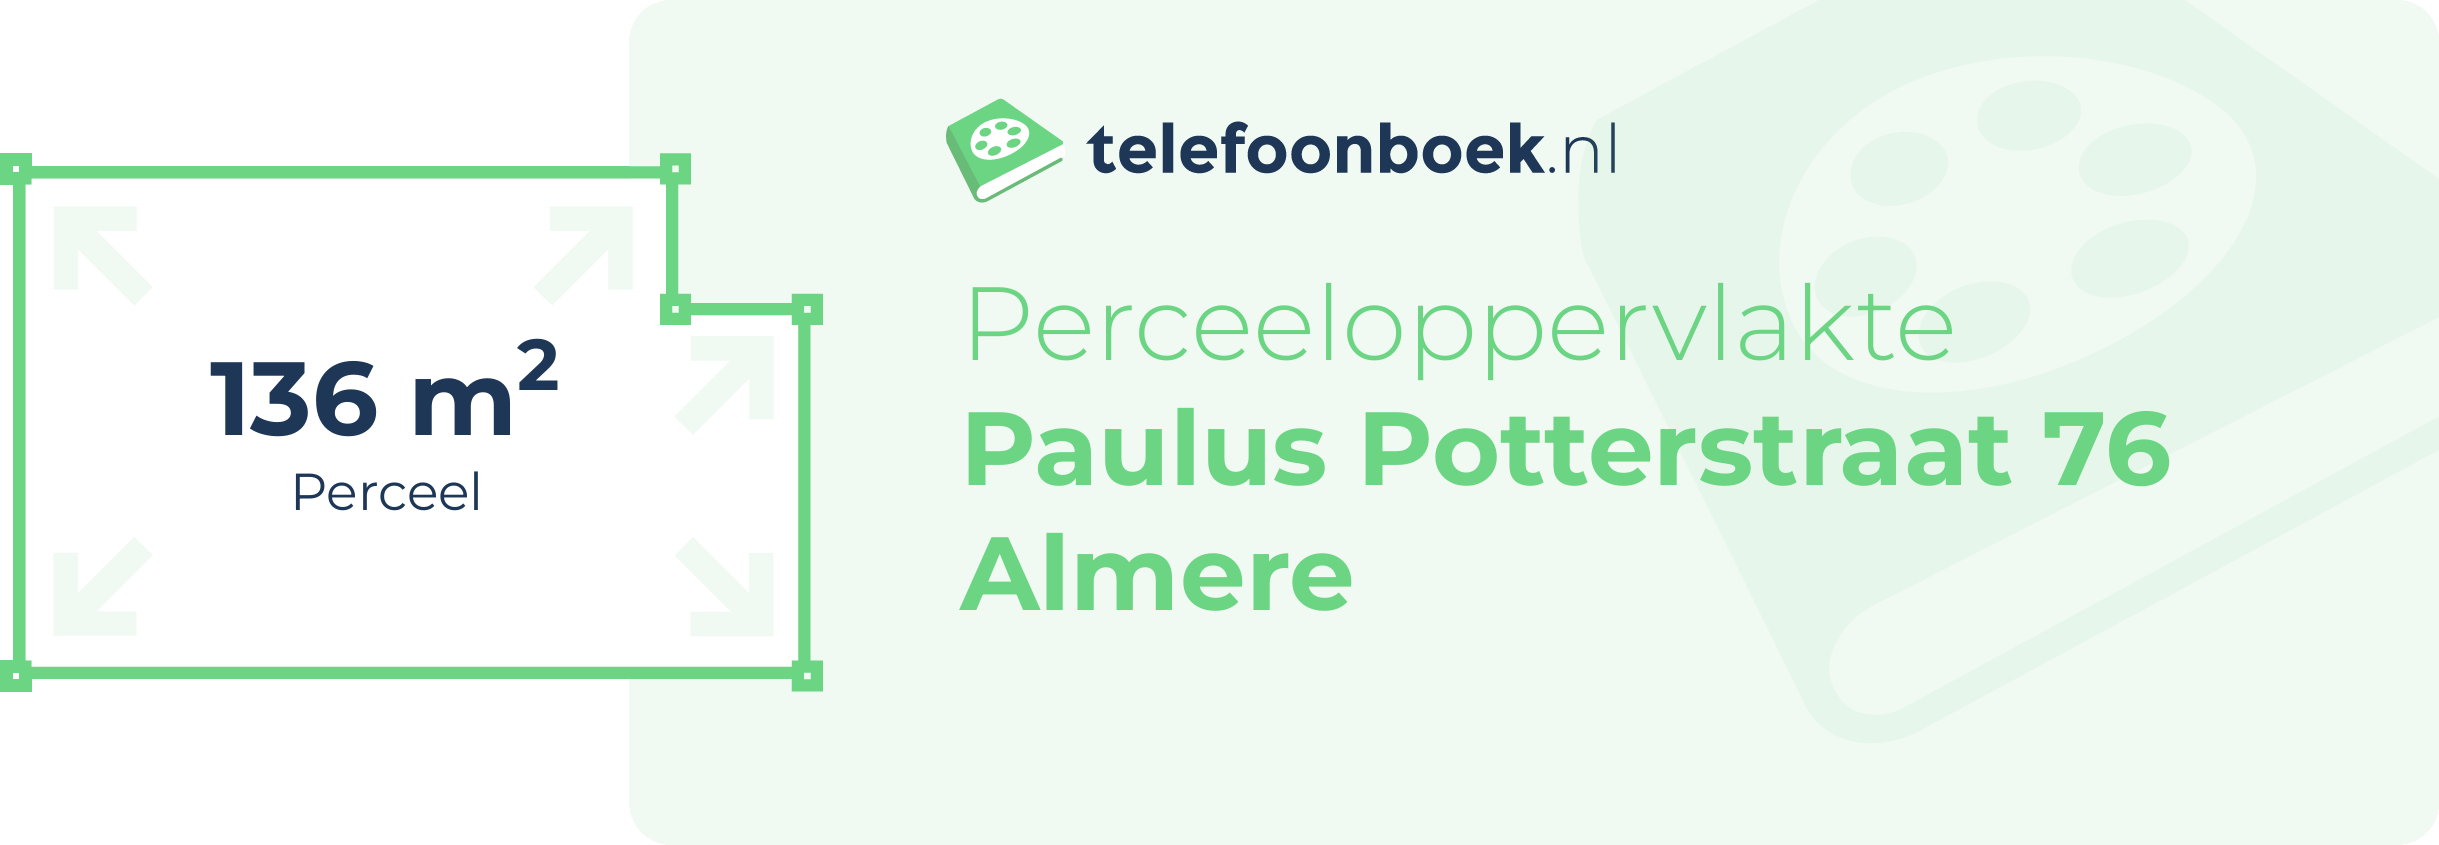 Perceeloppervlakte Paulus Potterstraat 76 Almere